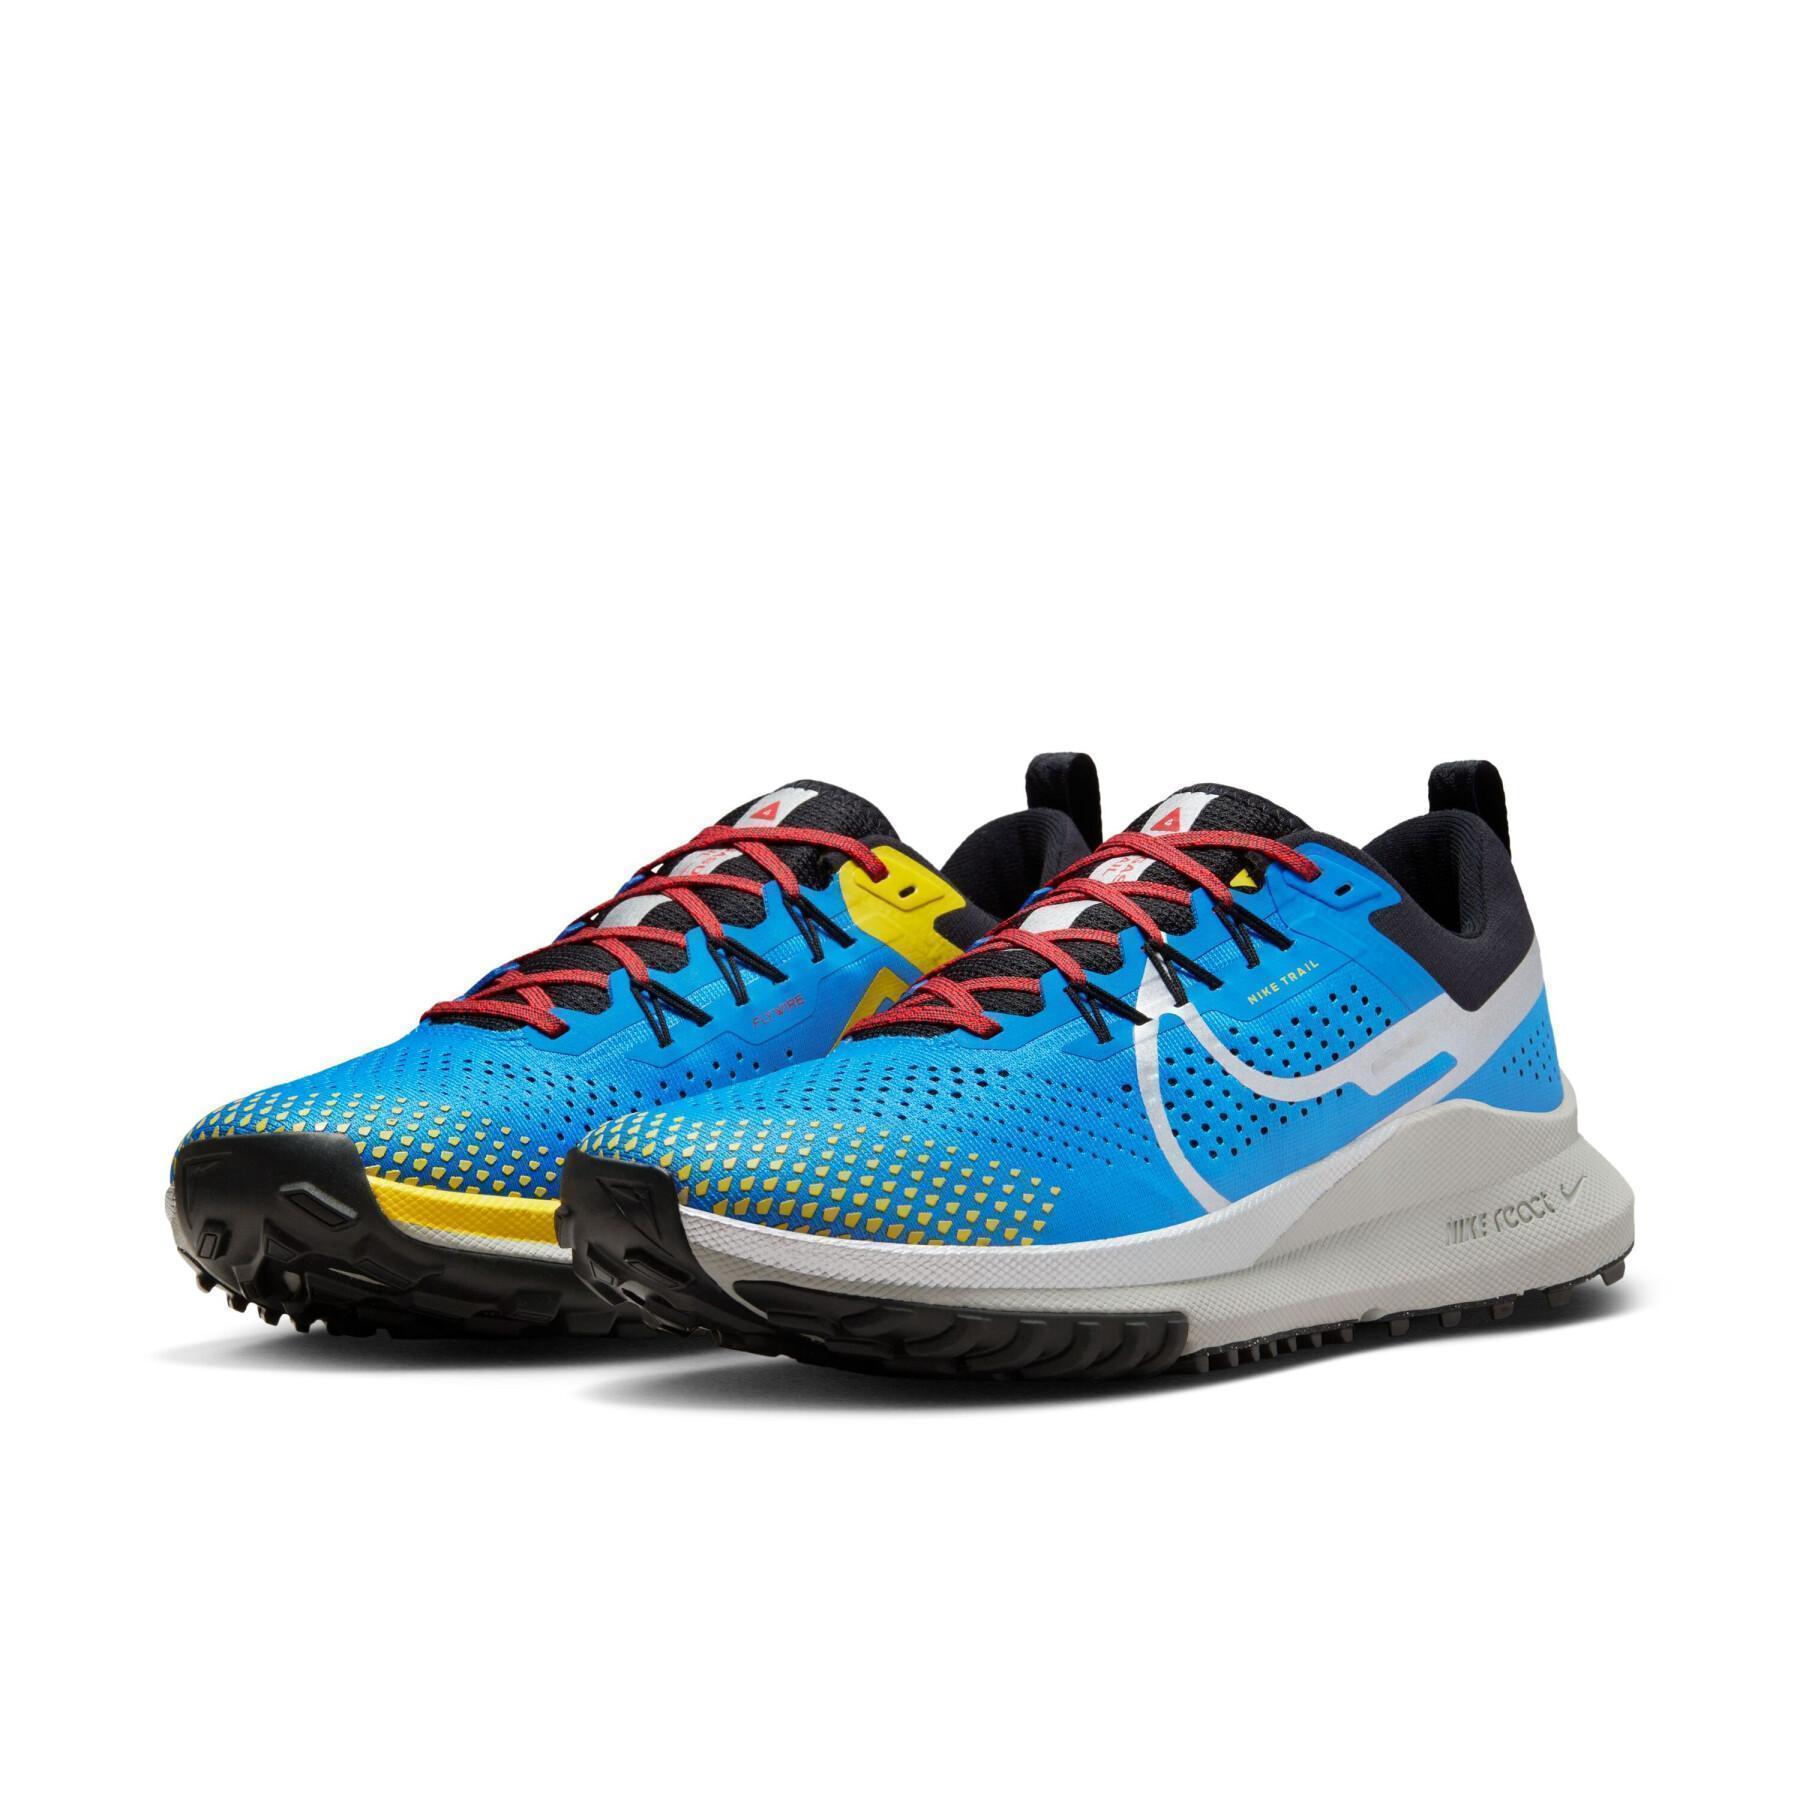 Chaussures de running Nike Pegasus Trail 4